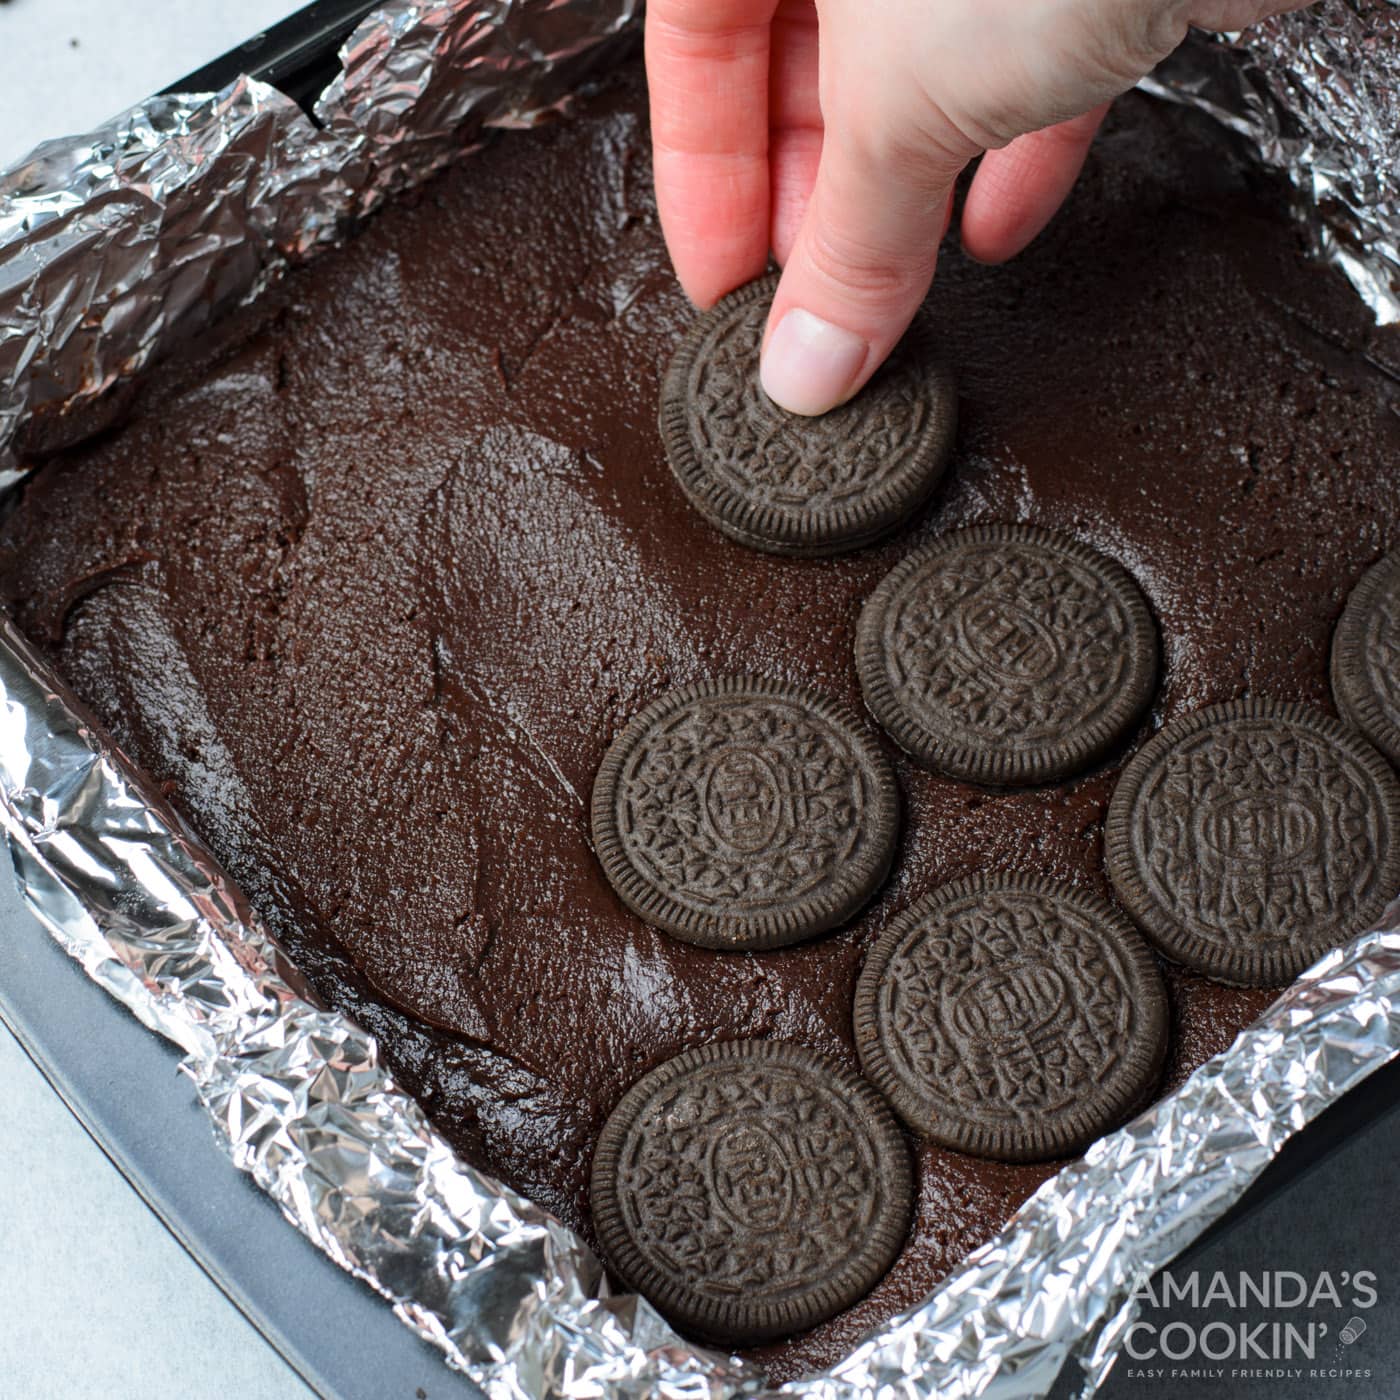 hand placing oreo cookies on top of brownie batter in a pan